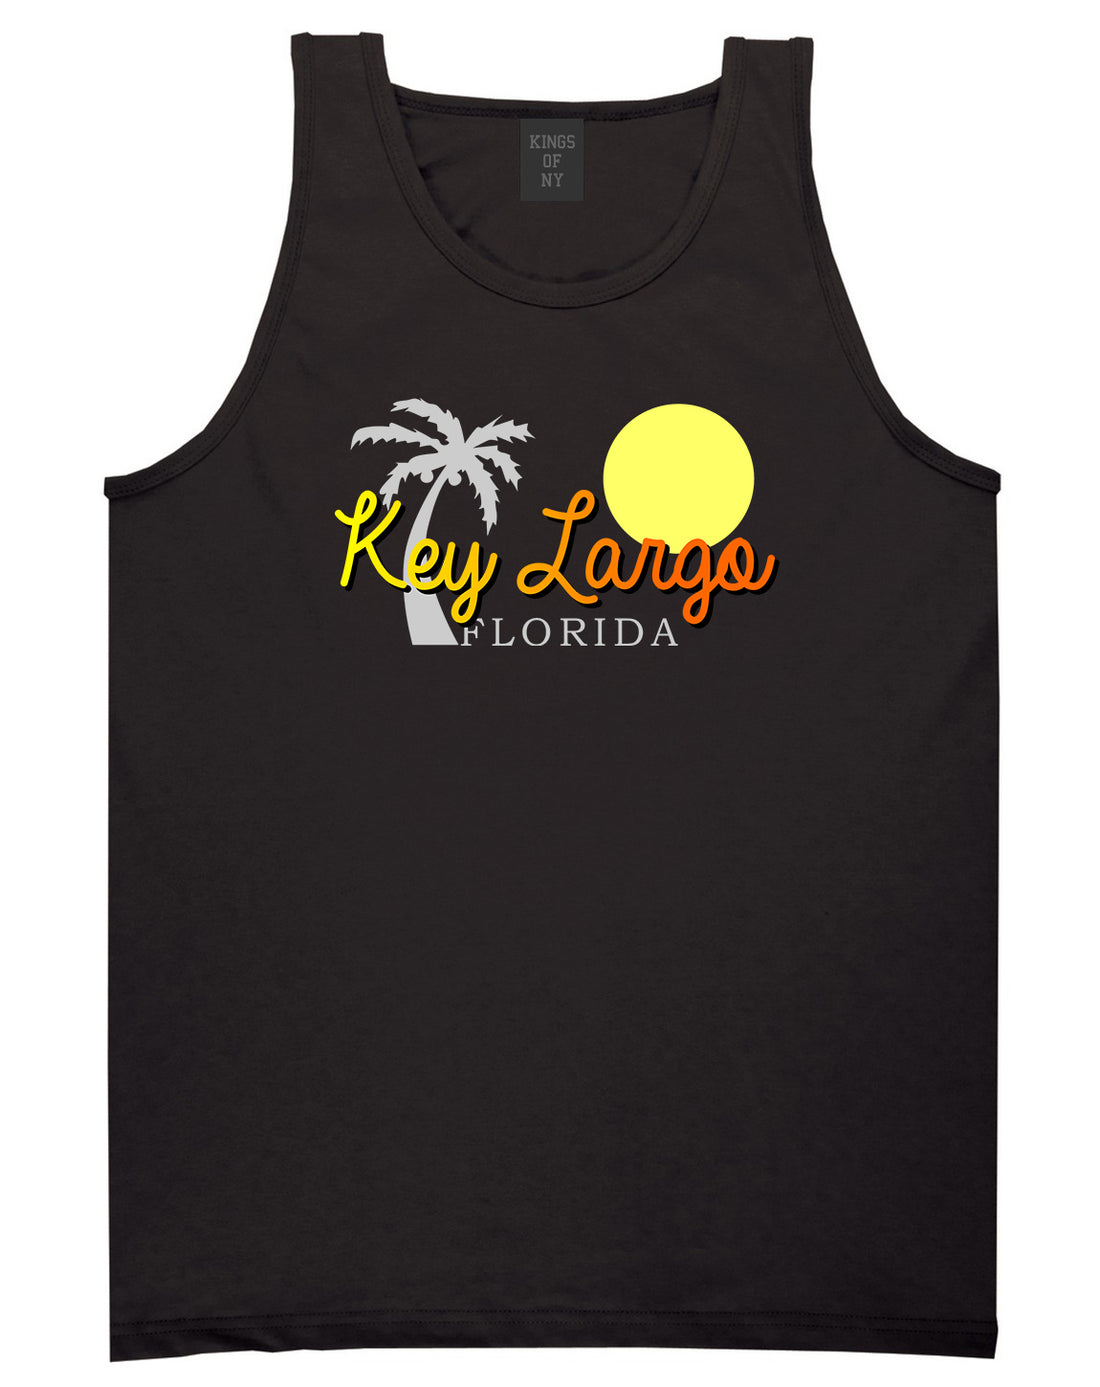 Key Largo Florida Souvenir Mens Tank Top Shirt Black by Kings Of NY